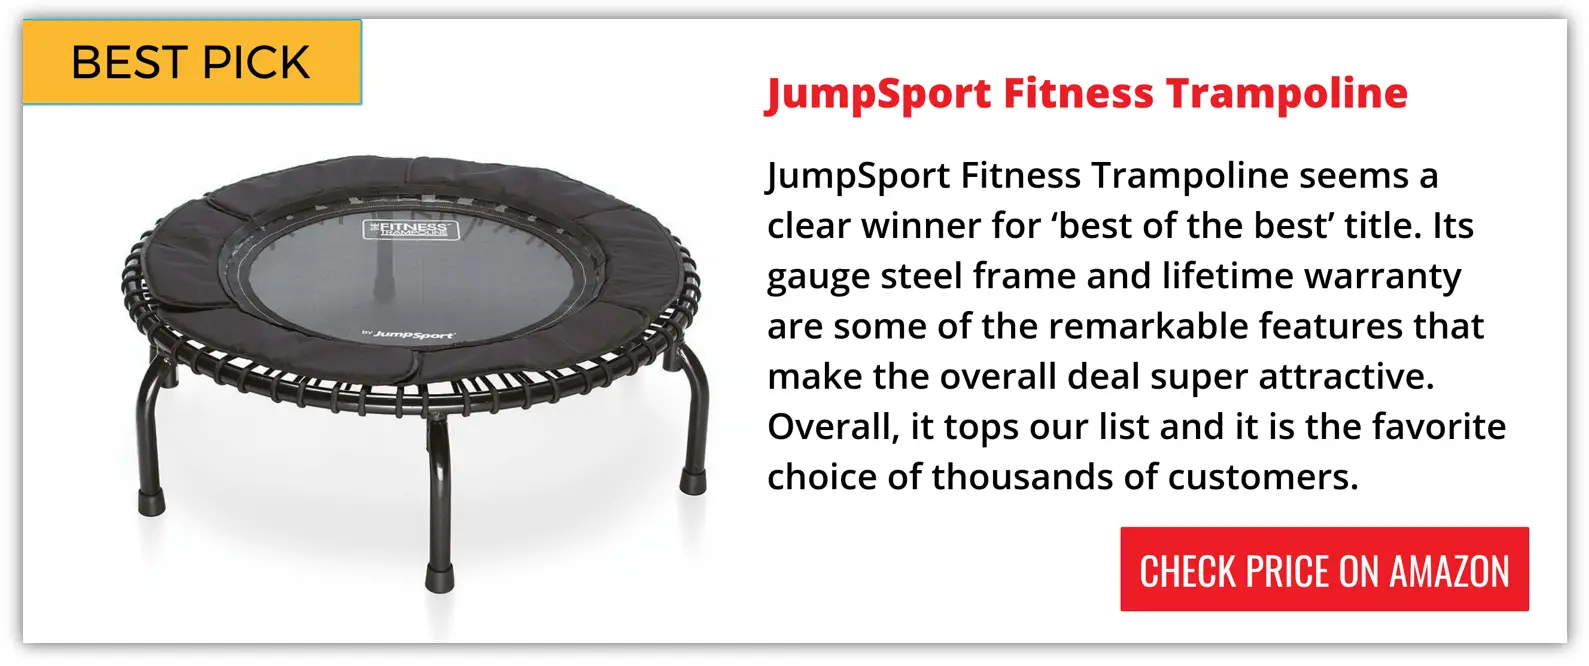 JumpSport Fitness Trampoline Model 250